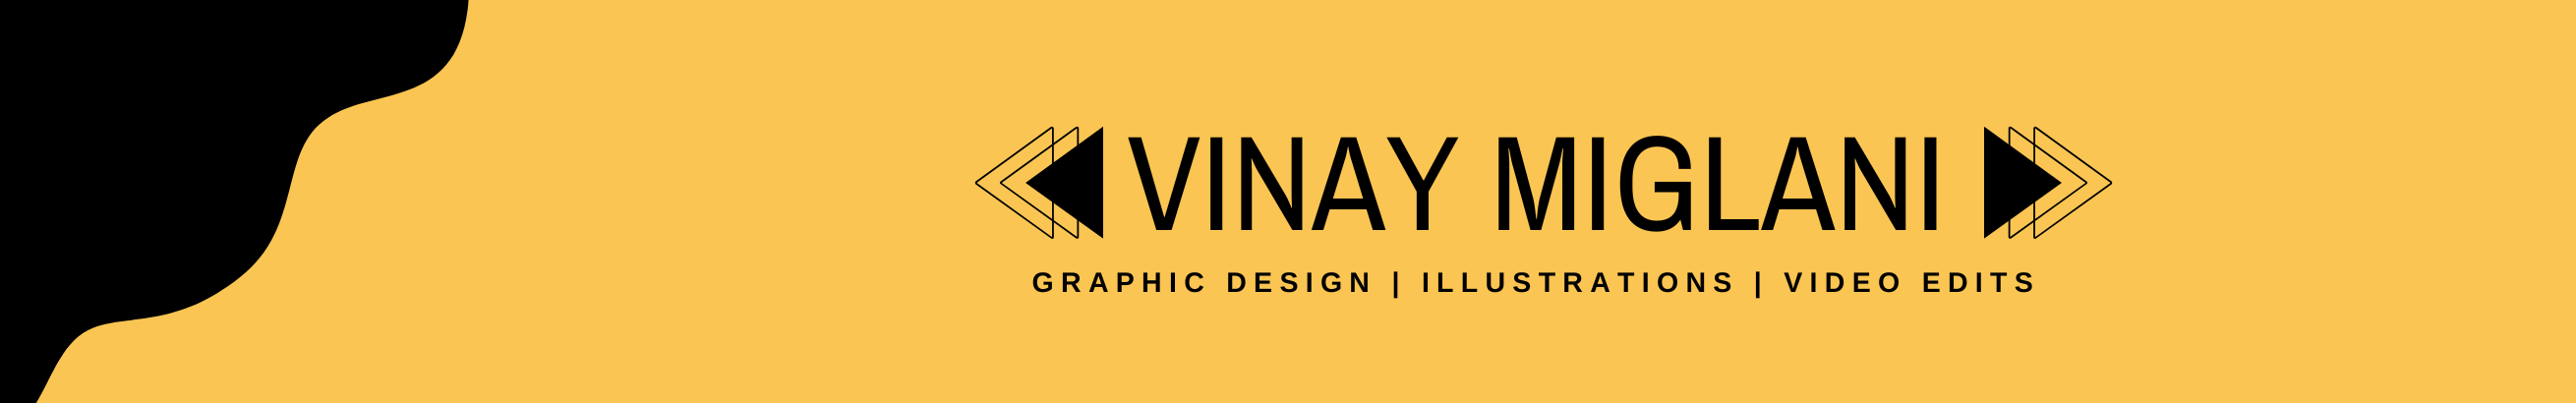 Vinay Miglani's profile banner